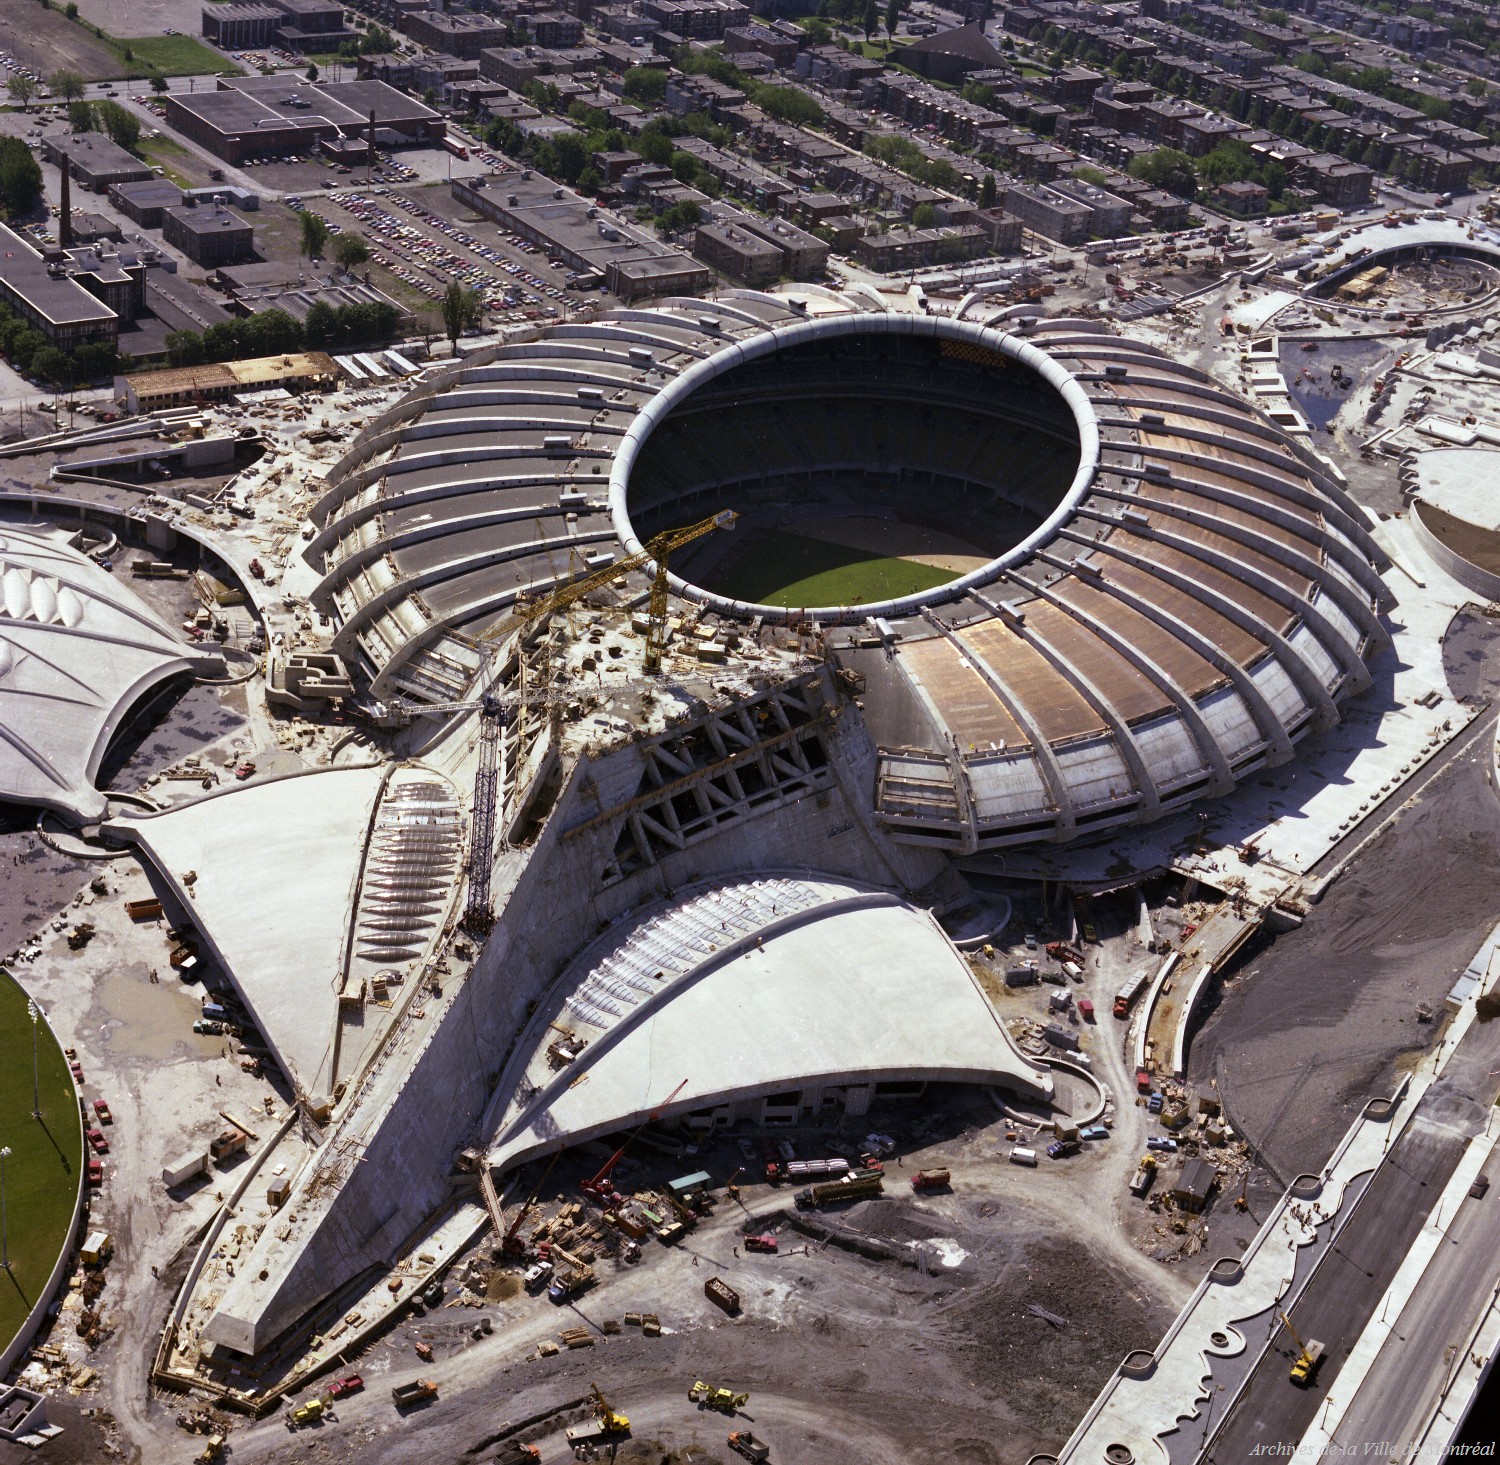 montreal olympic stadium